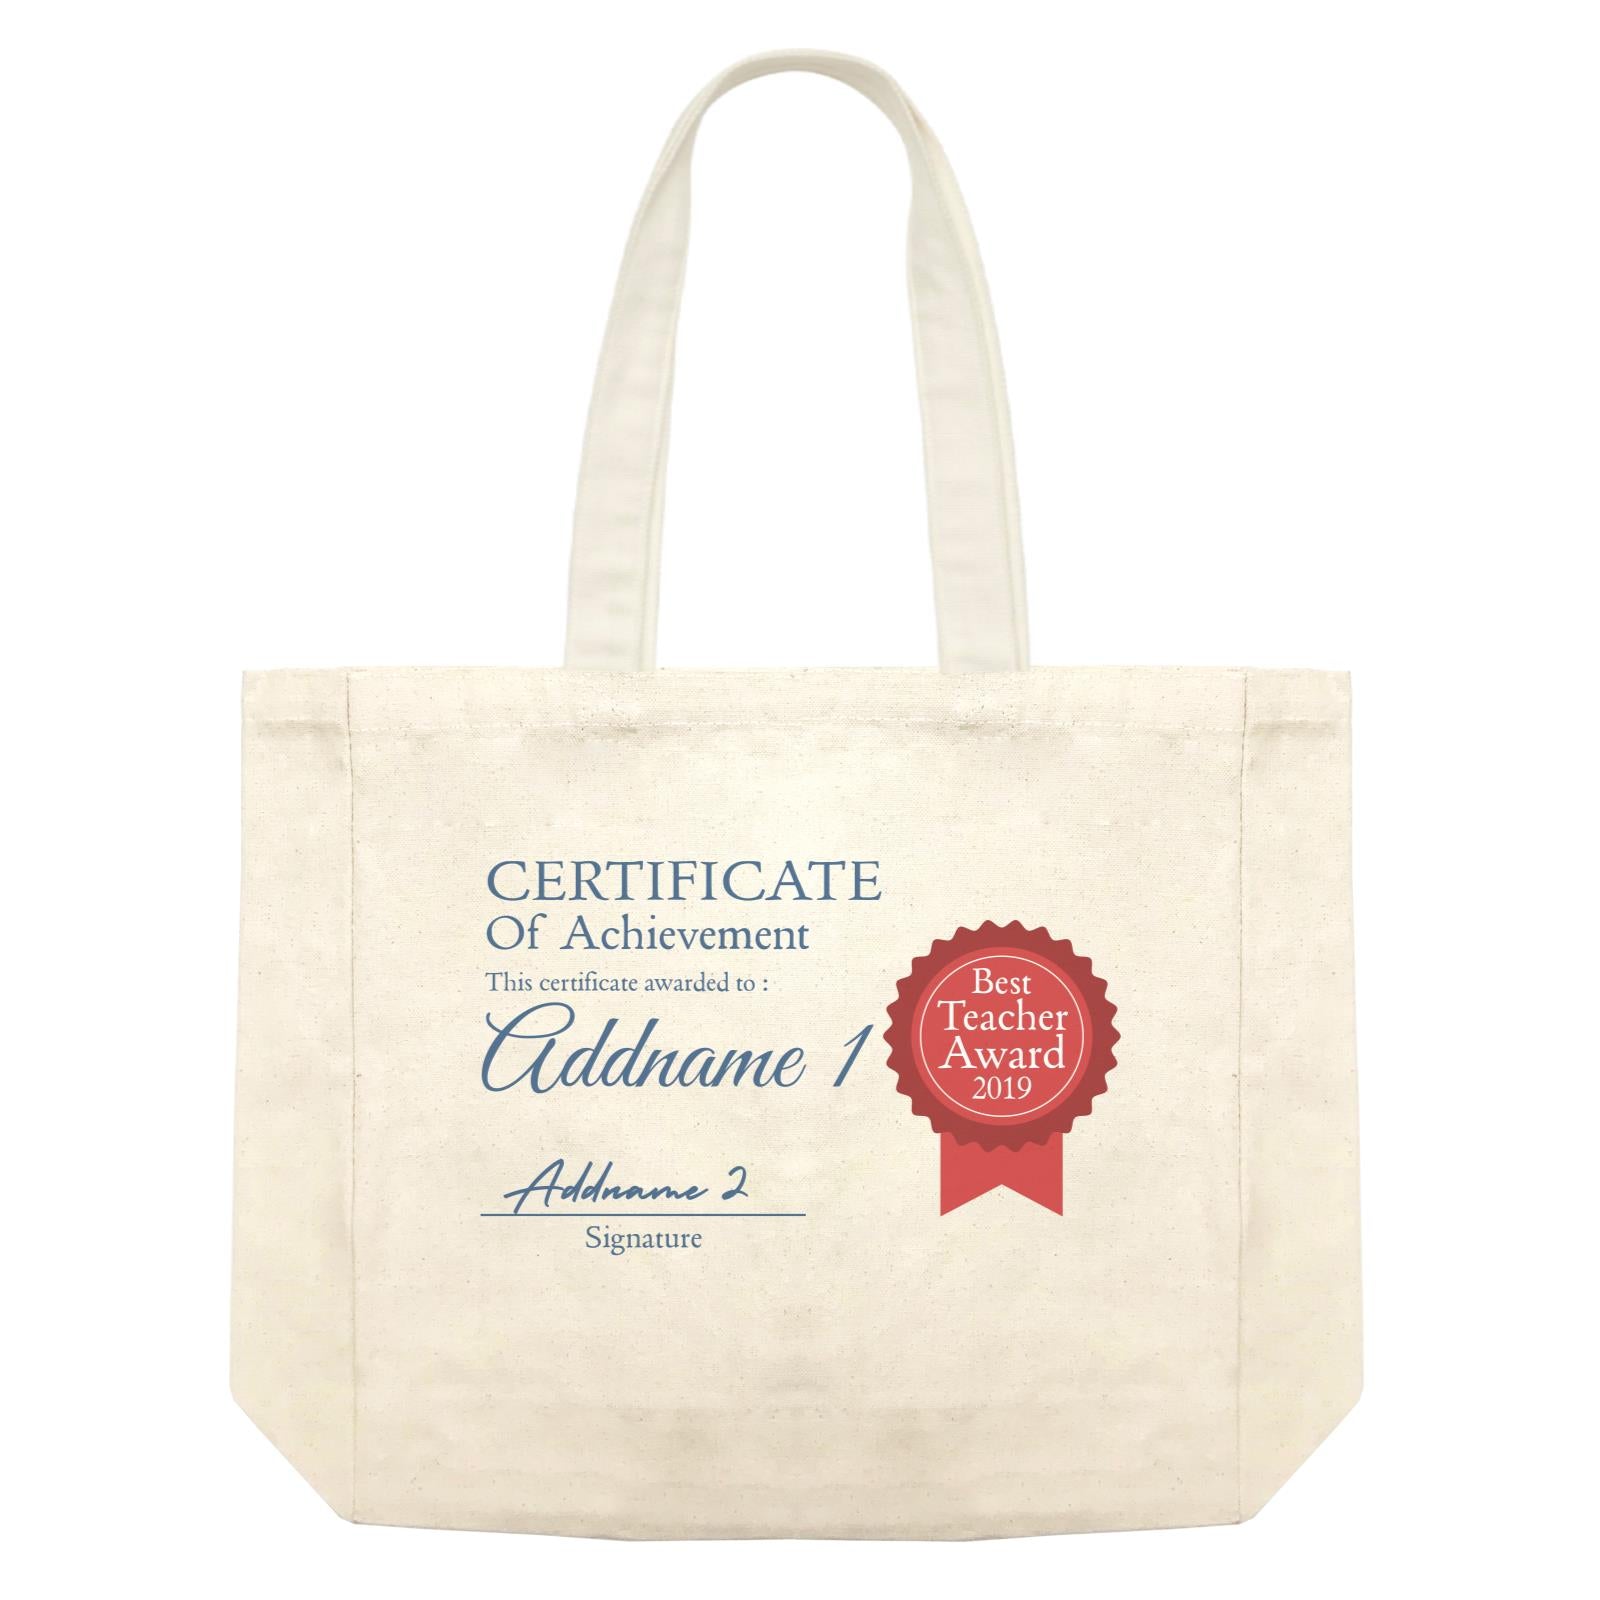 Teacher Certificate Best Teacher Award Addname 1 & Addname 2 Shopping Bag